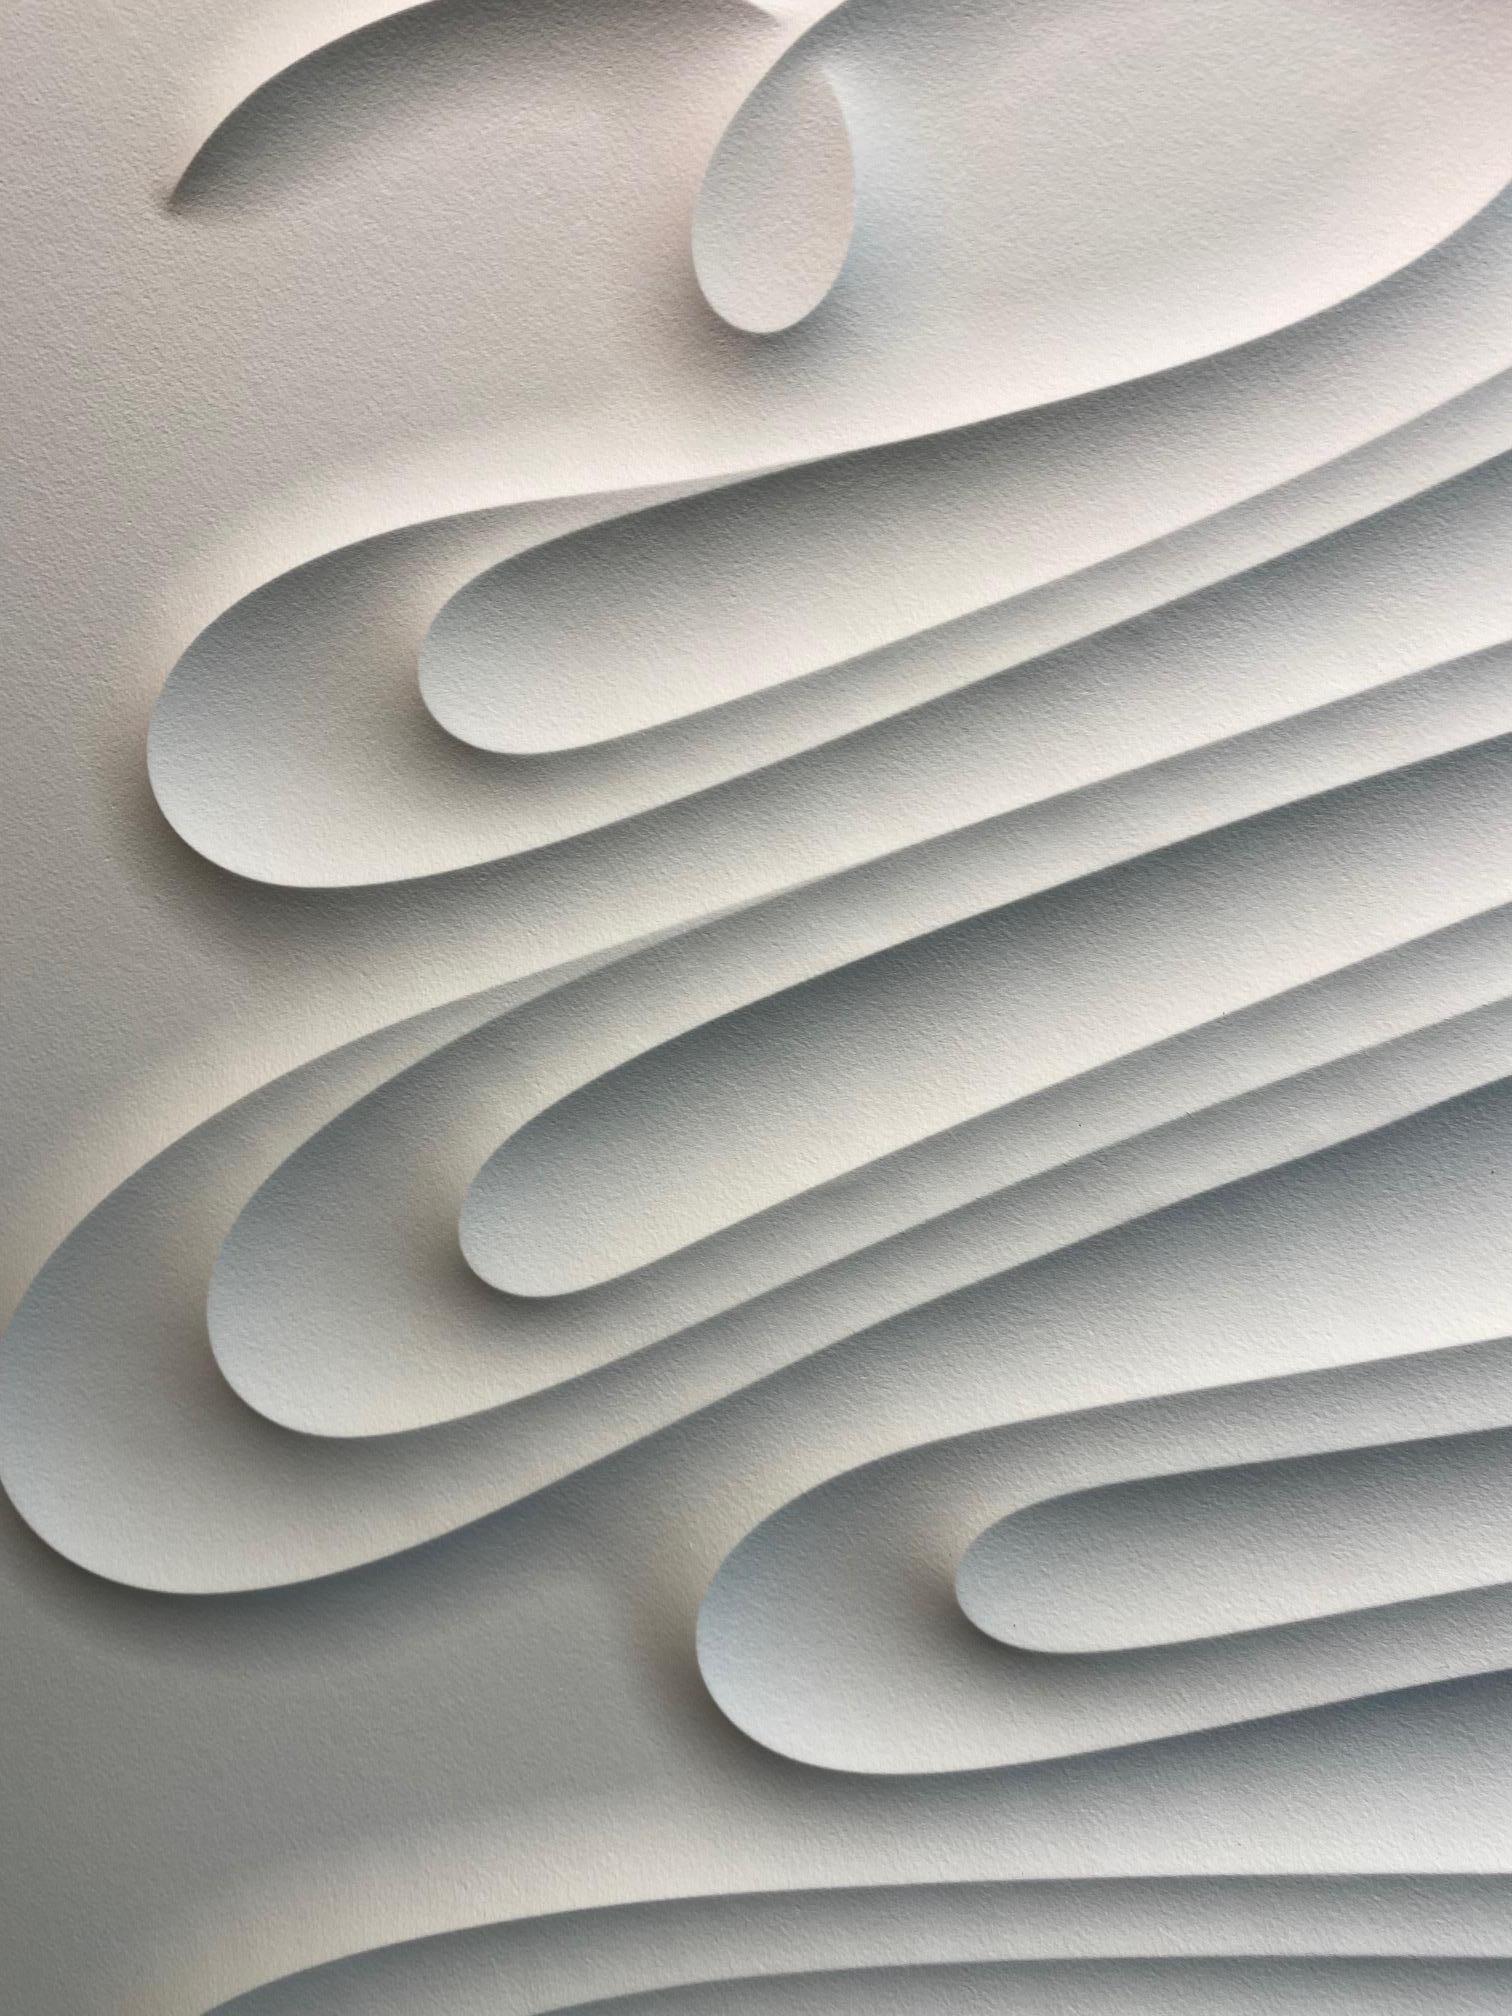 Tango - embossed paper work, minimalist curvilinear white artwork Jacinto Moros 6